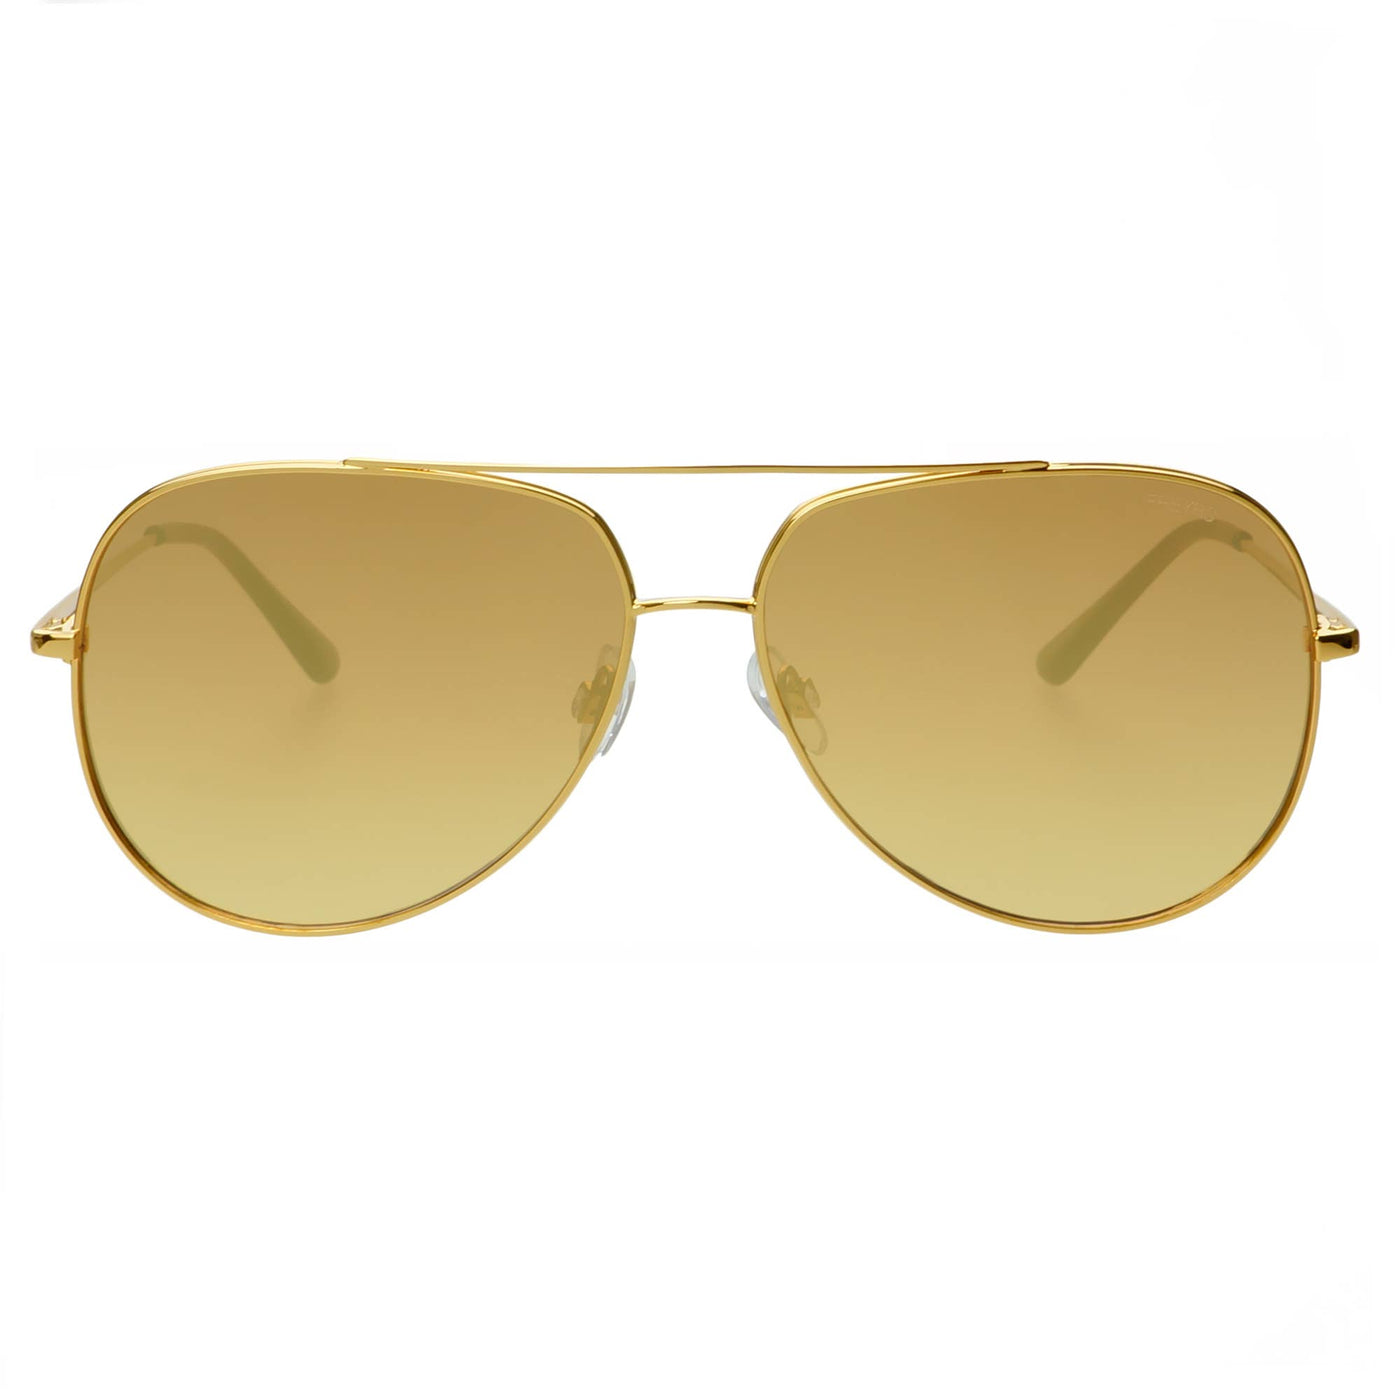 Max Aviators Sunglasses